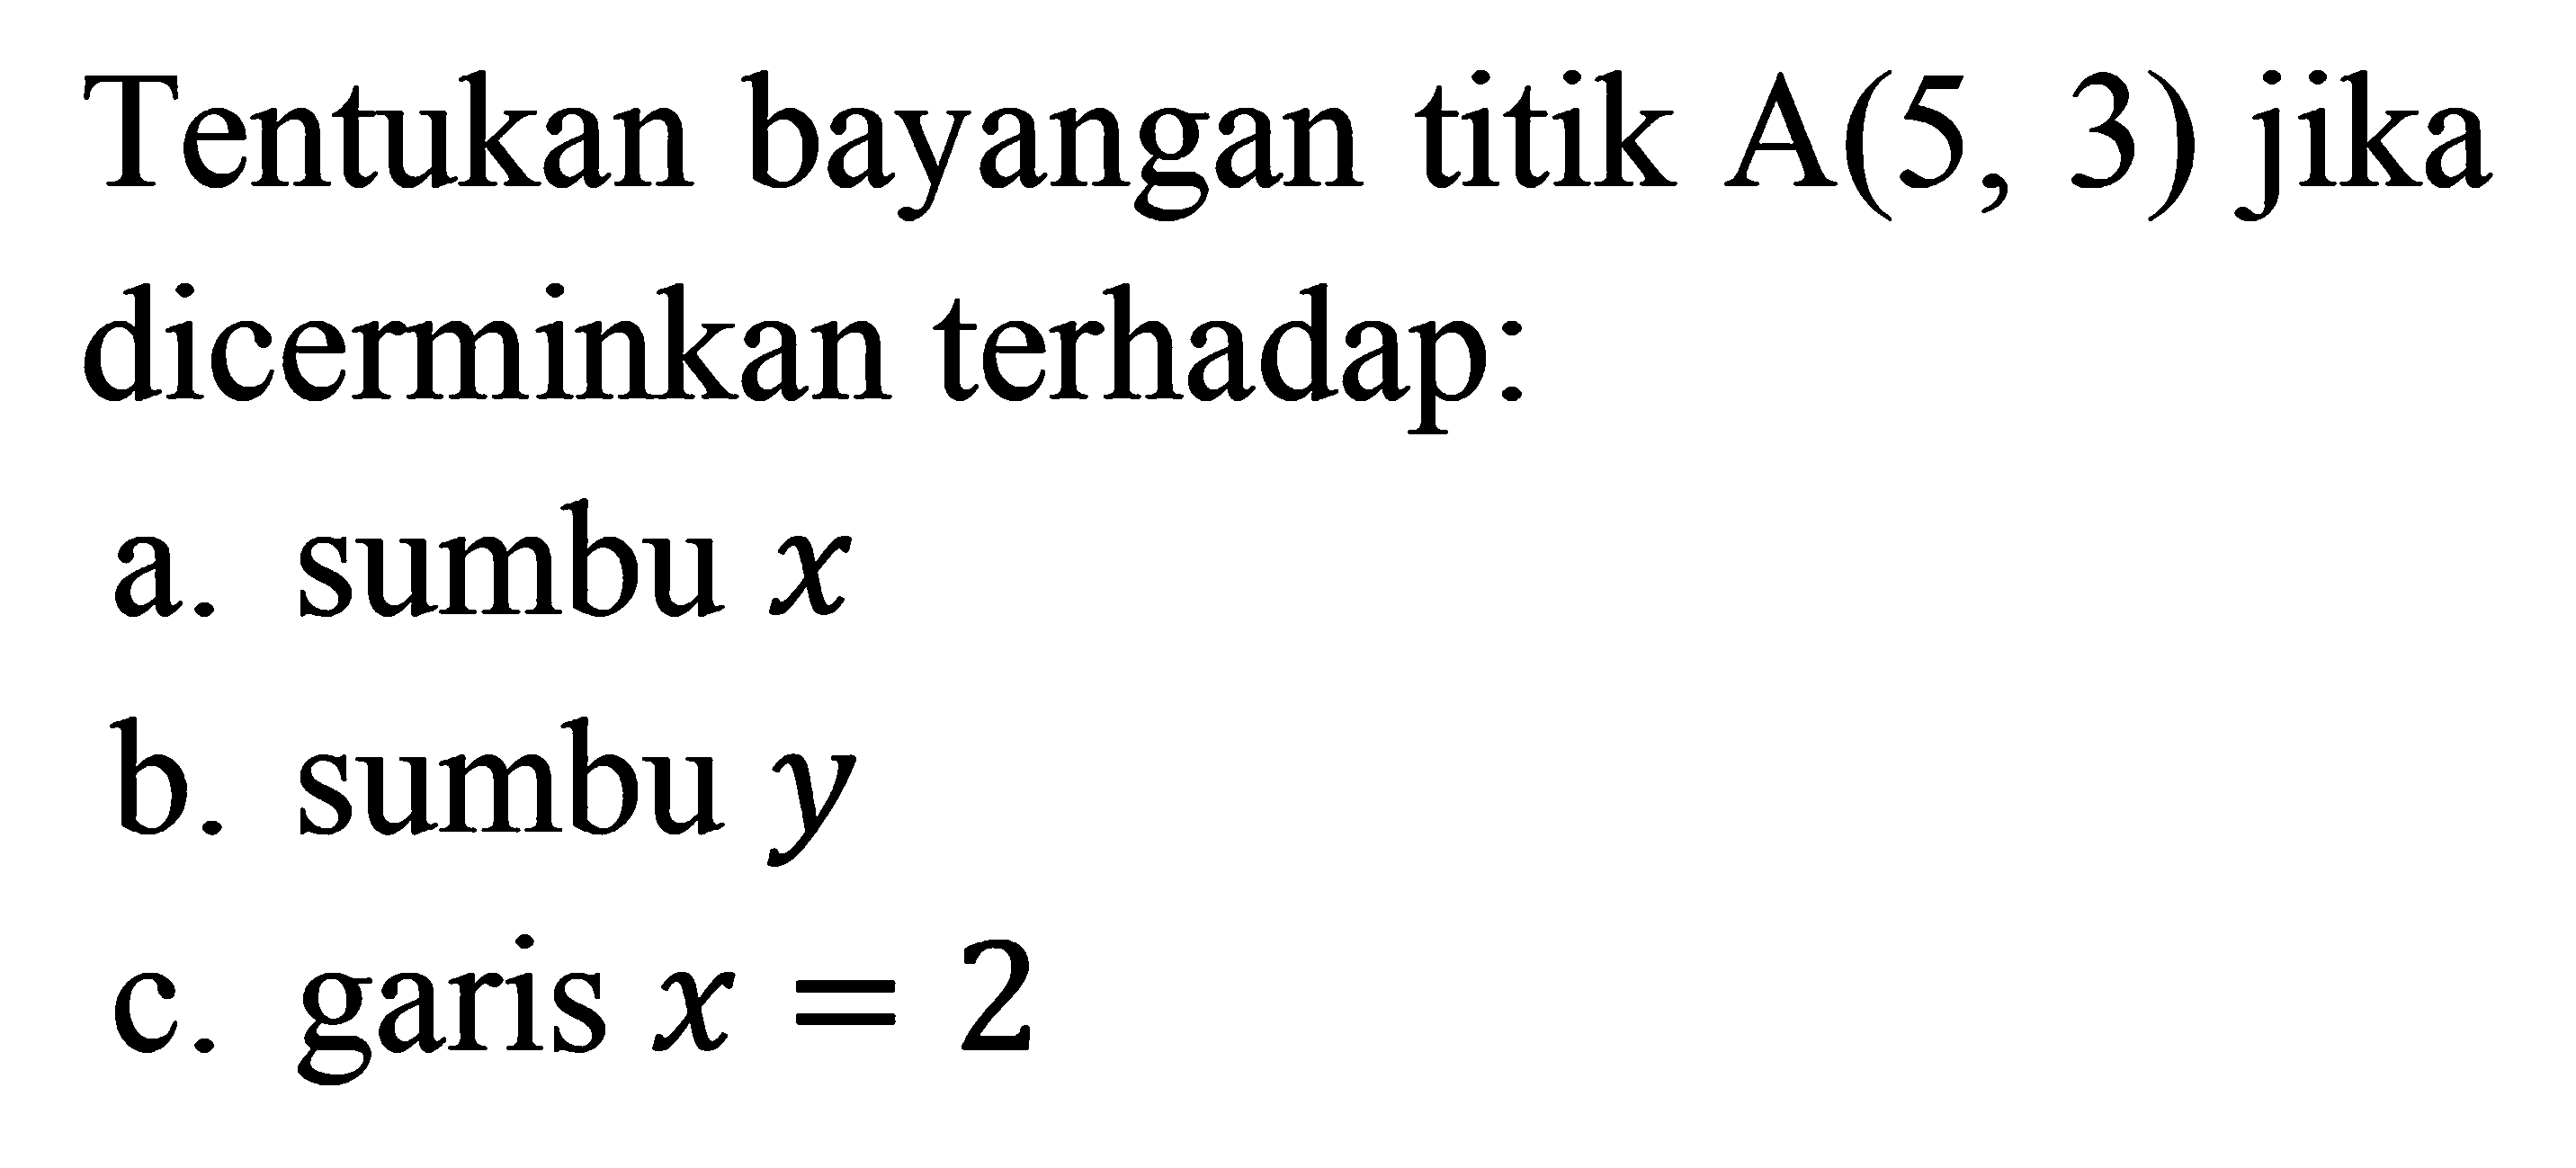 Tentukan bayangan titik A(5, 3) jika dicerminkan terhadap: a. sumbu x b. sumbu y c. garis x=2